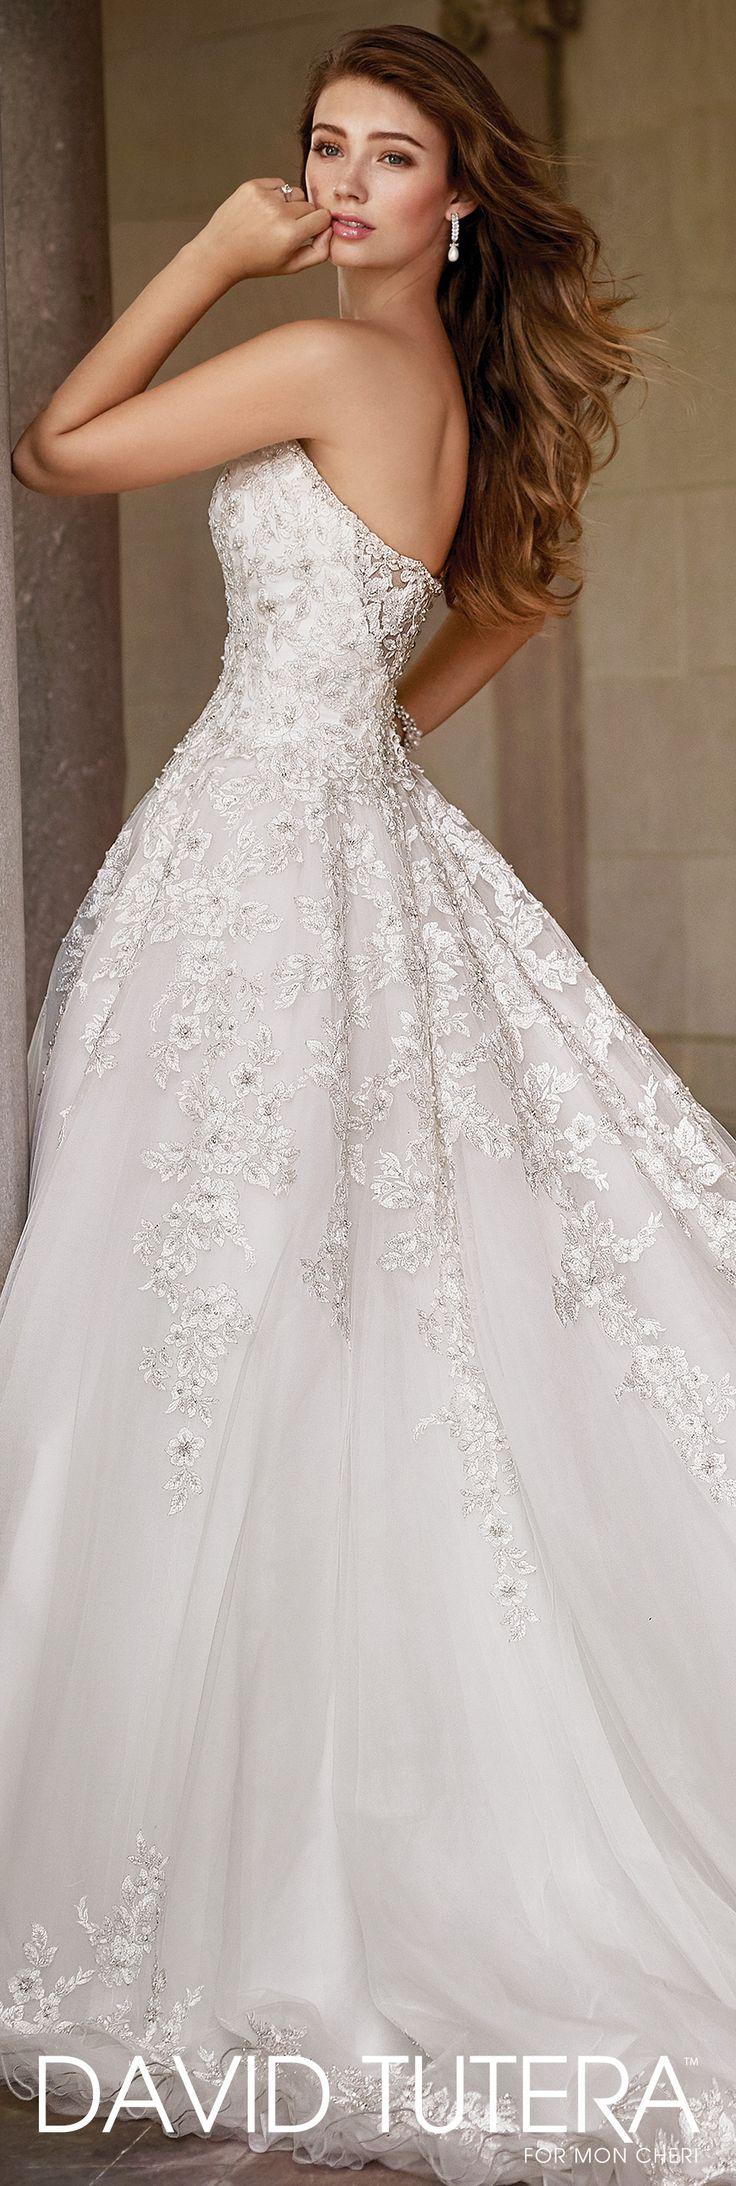 Wedding - Sweetheart Neckline Embroidered Ball Gown Wedding Dress-117281 Zarina